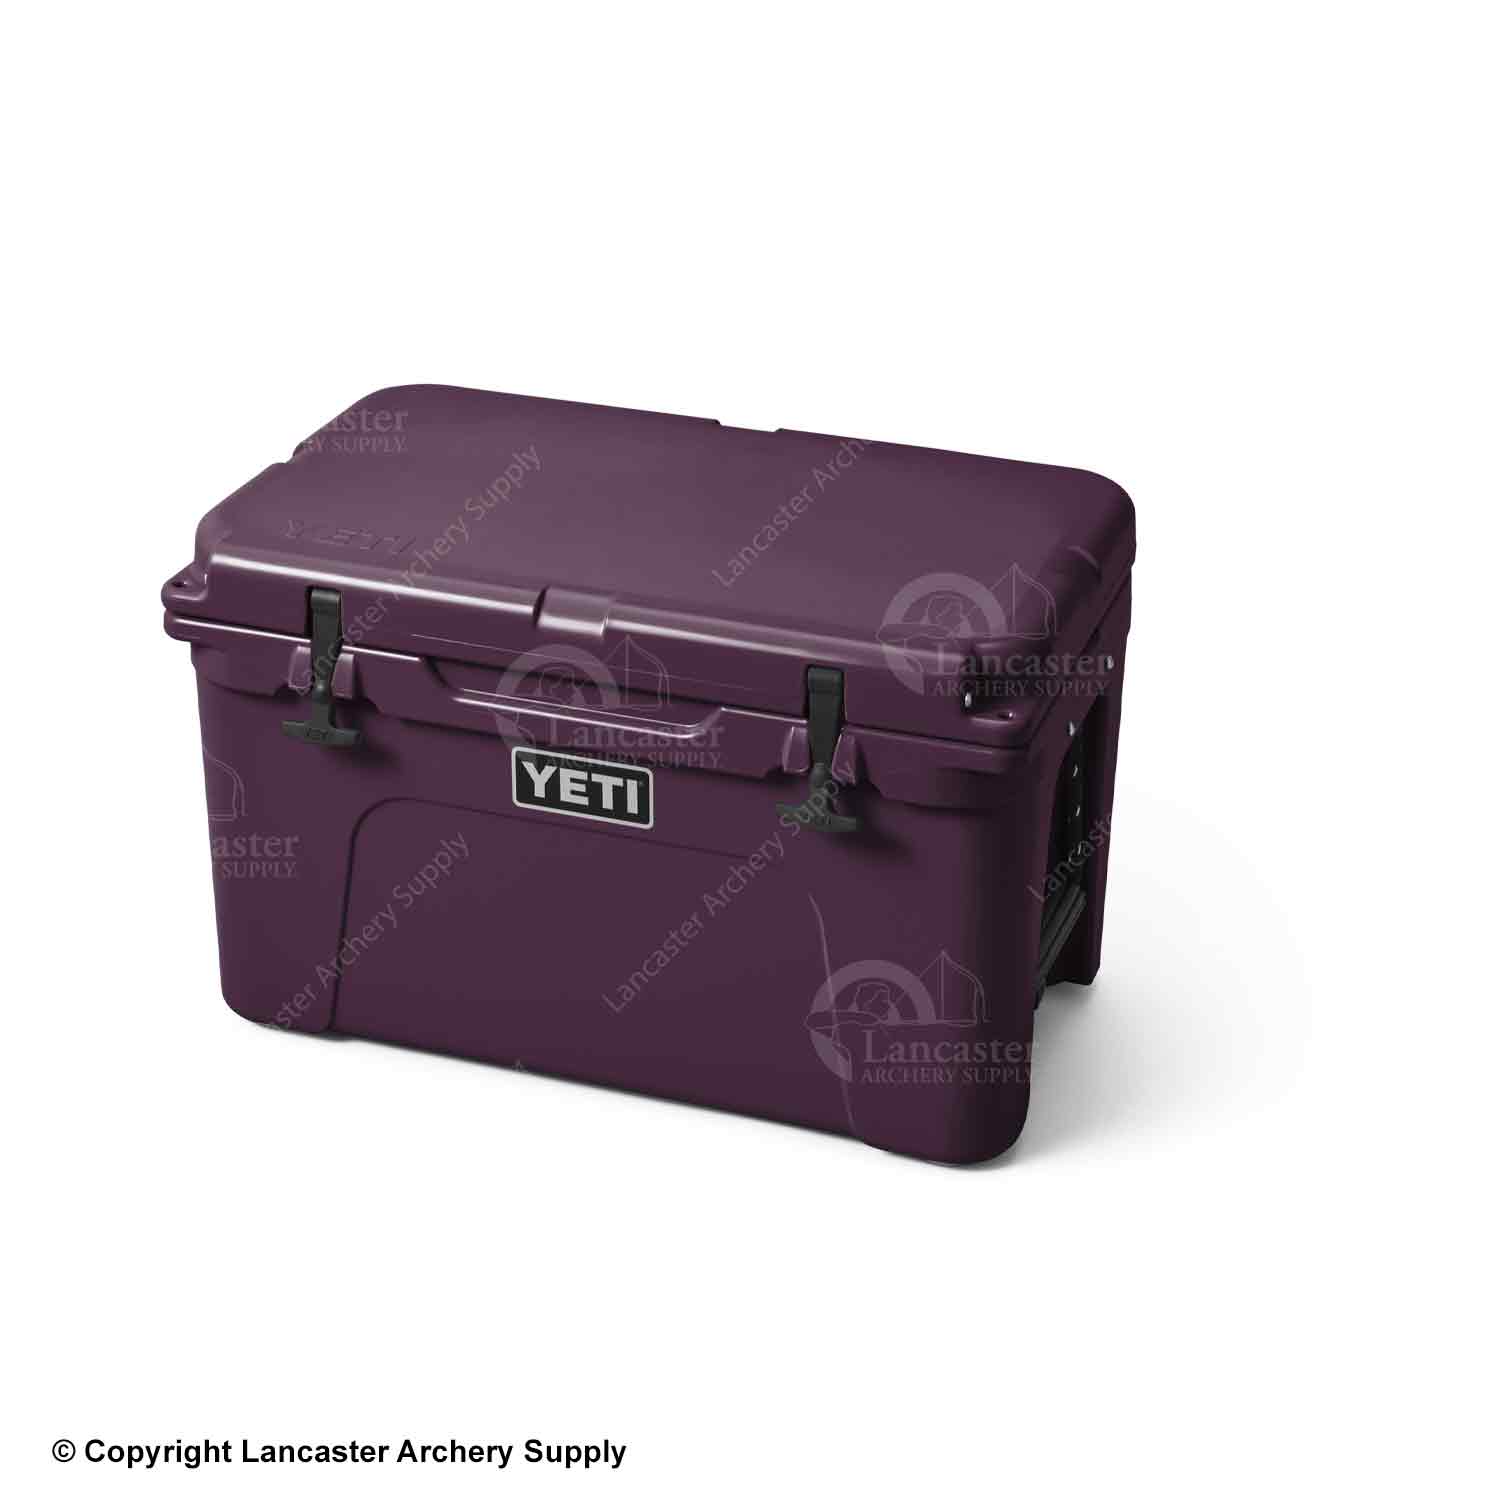 YETI Tundra 45 Cooler (Limited Edition Nordic Purple) – Lancaster